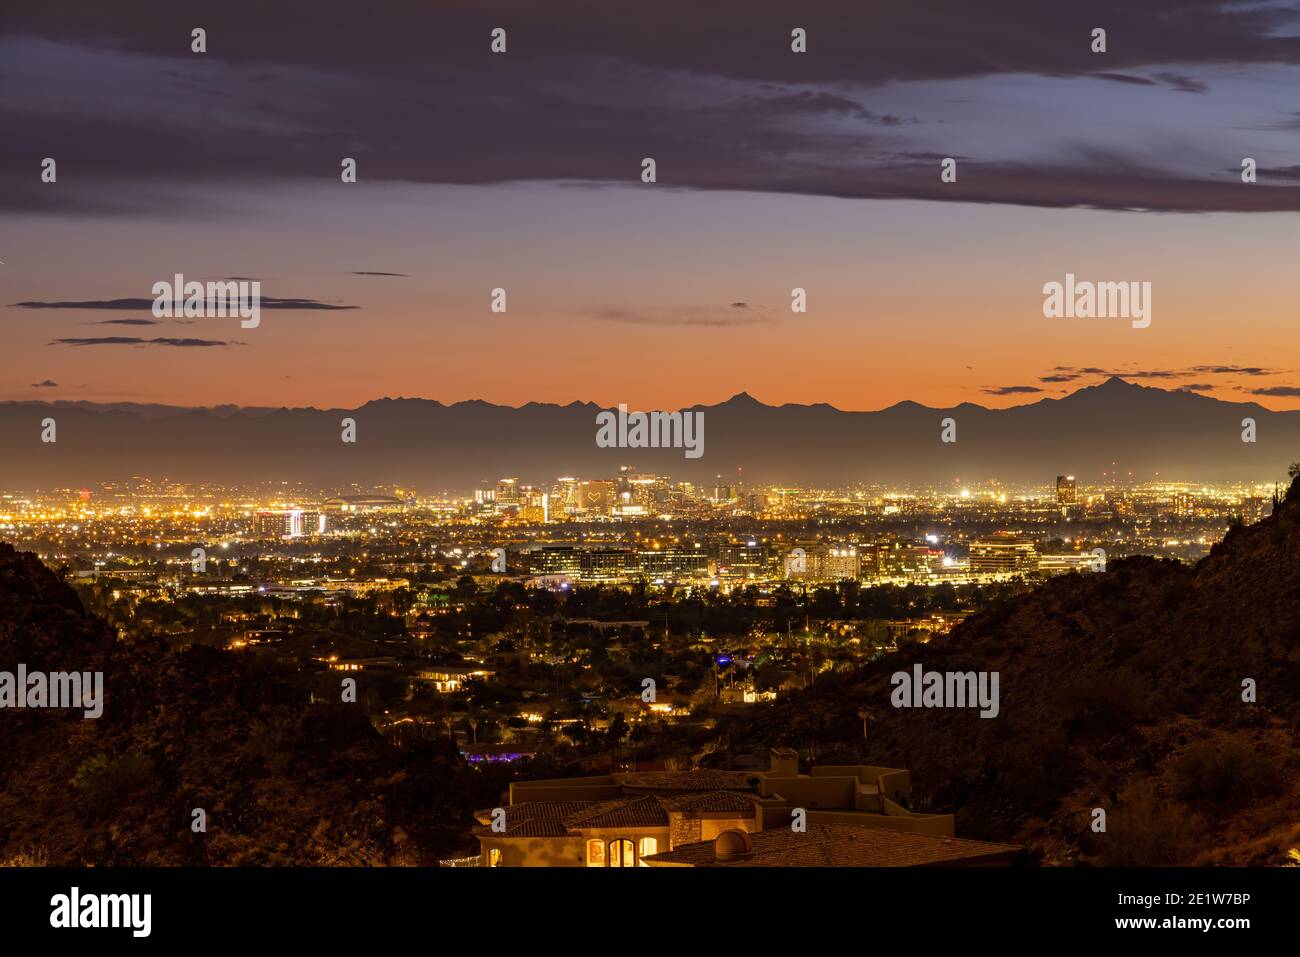 Phoenix arizona skyline night hi-res stock photography and images - Alamy